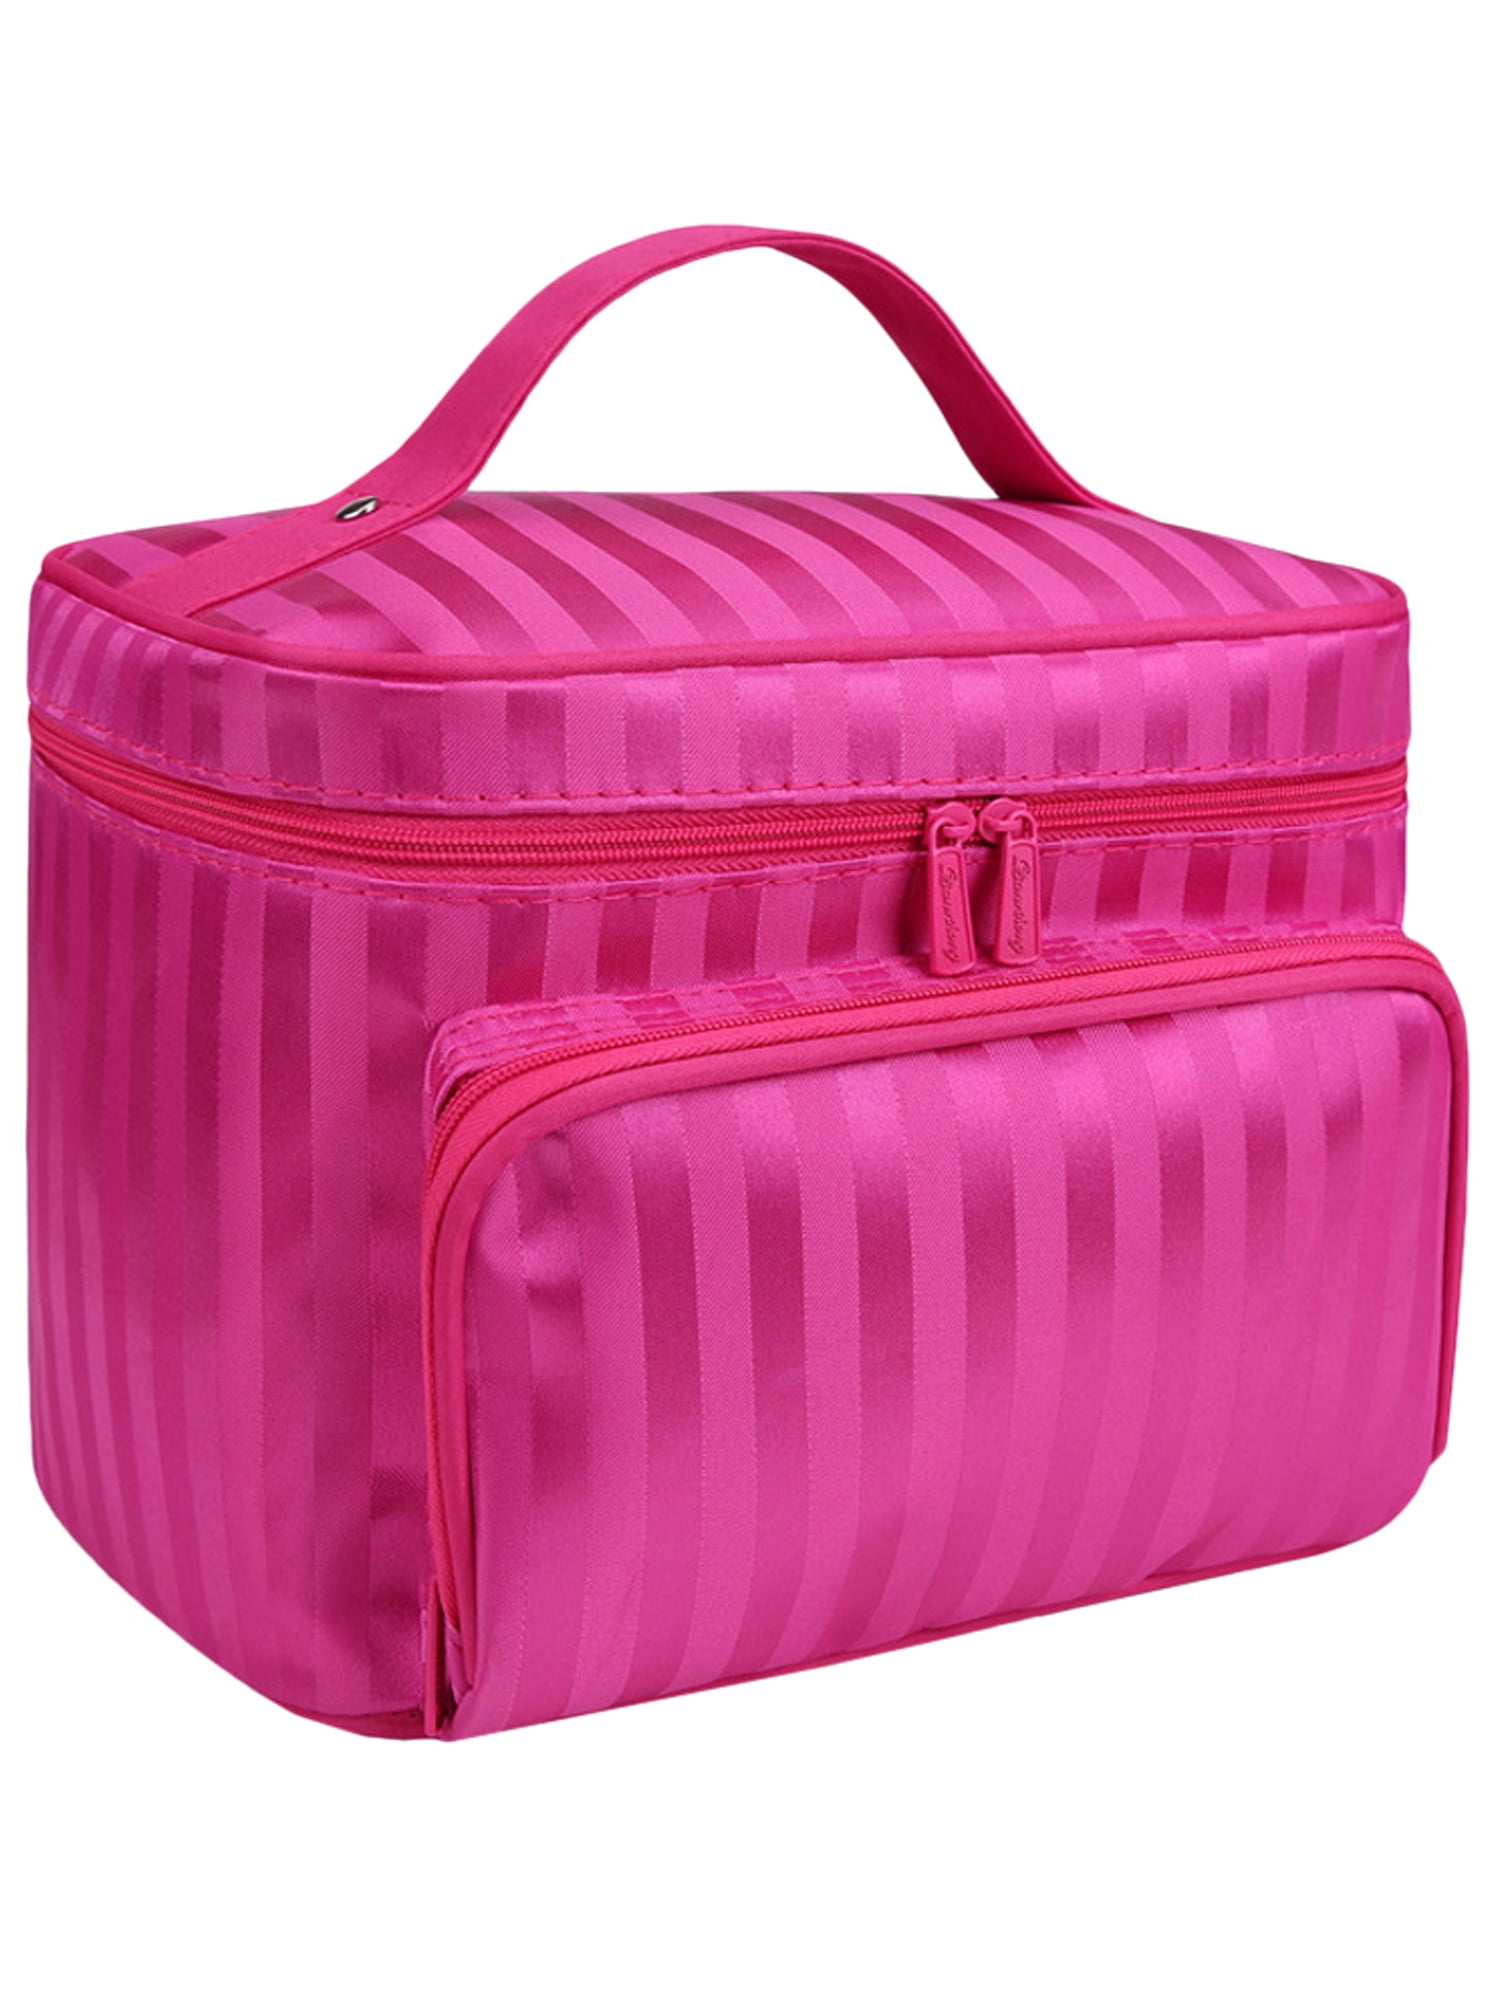 Women's Travel Cosmetic Bags Makeup Case Toiletry Handbag Pouch ...